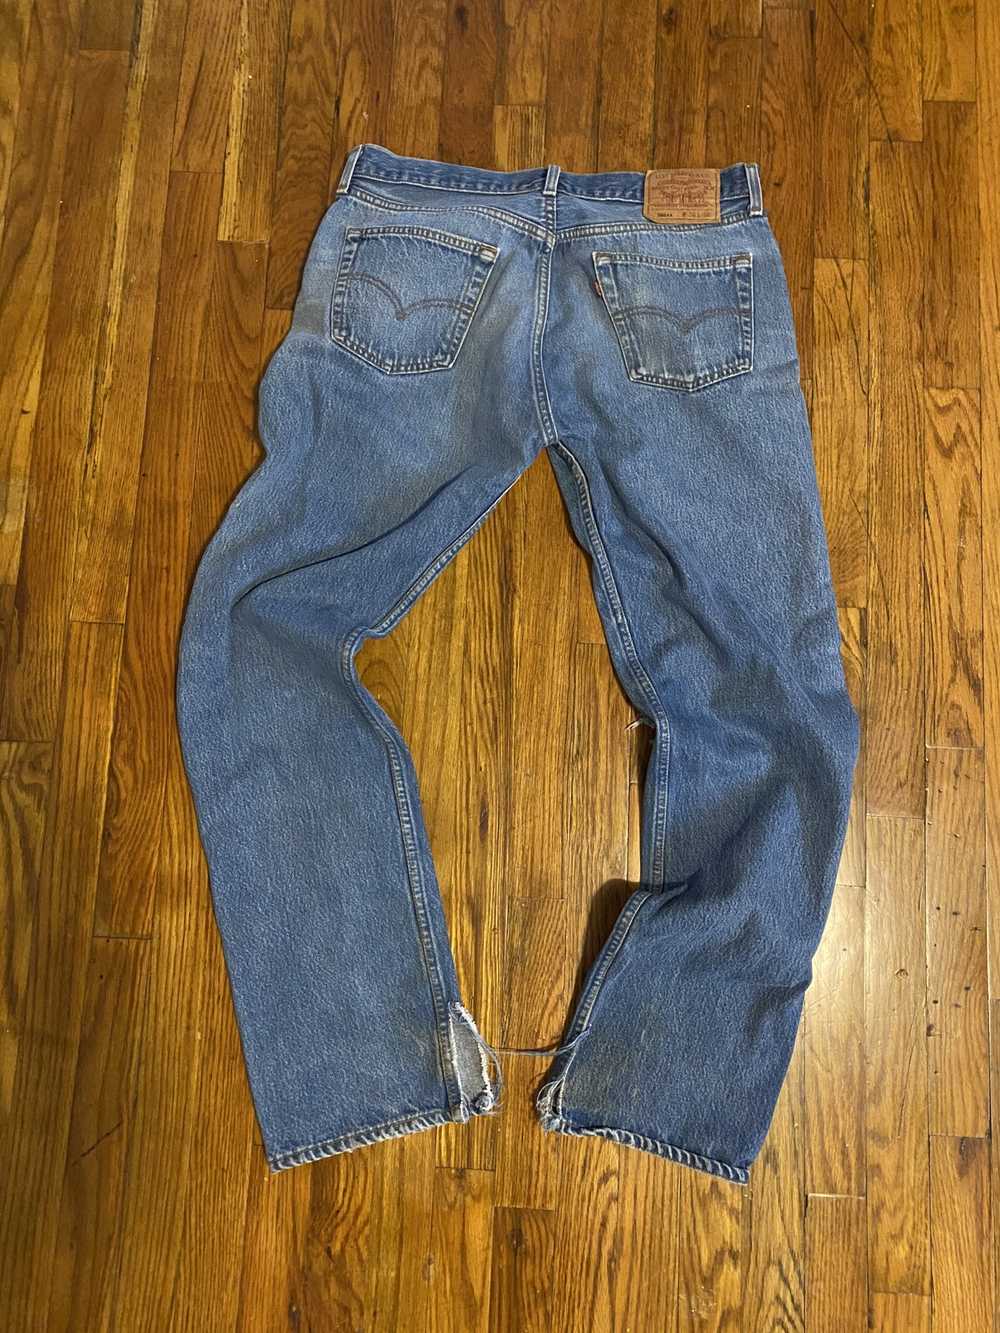 Levi's Vintage 501 distressed denim jeans - image 3